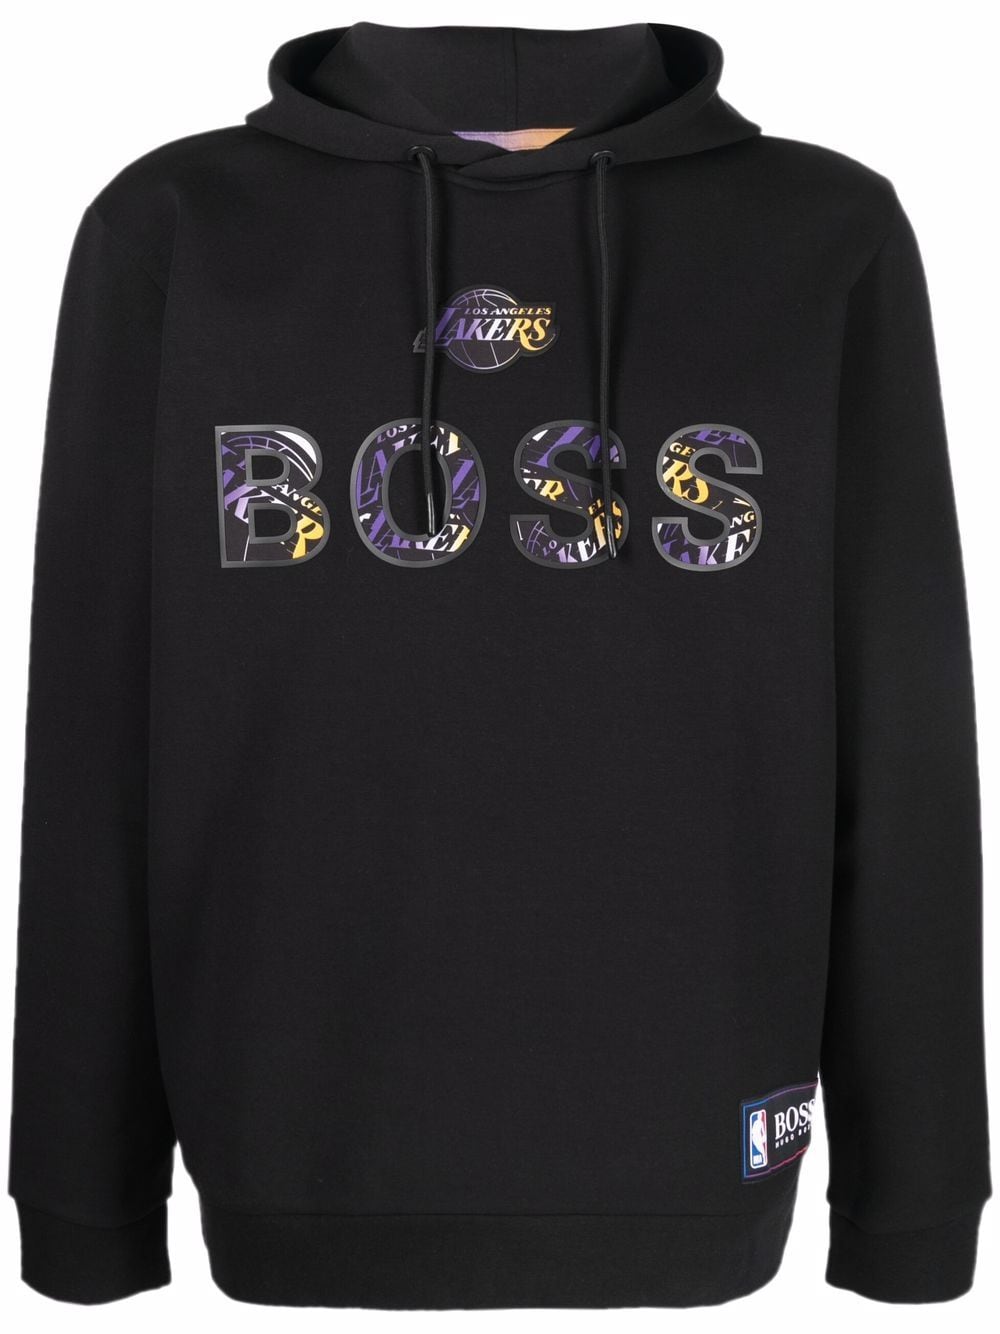 Boss x NBA: Lakers Sweatshirt